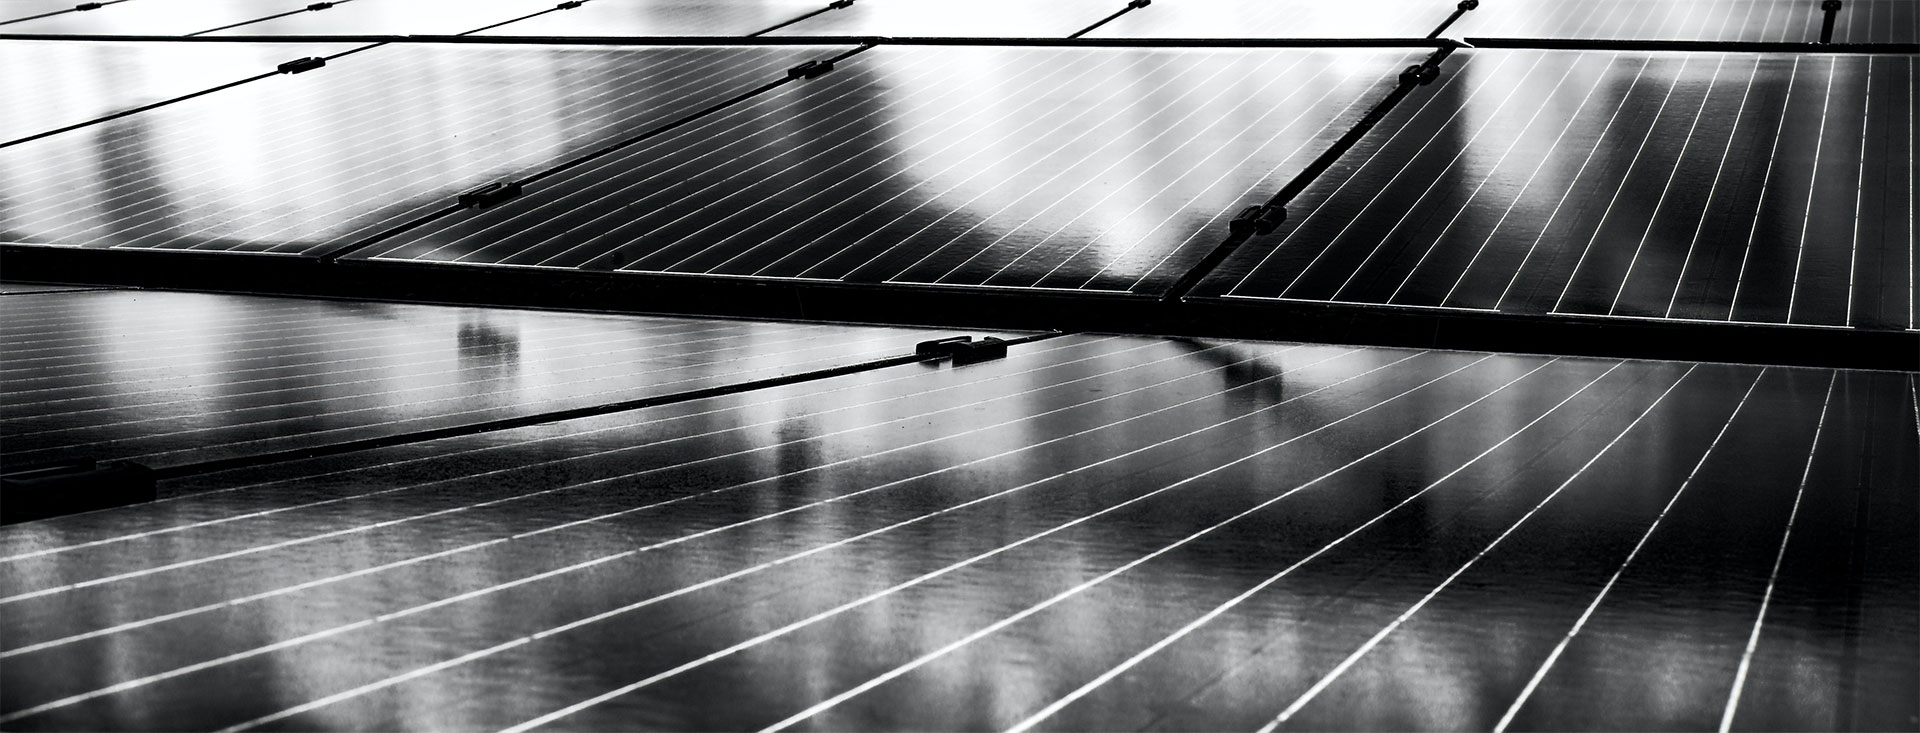 Solar panel. Photo.